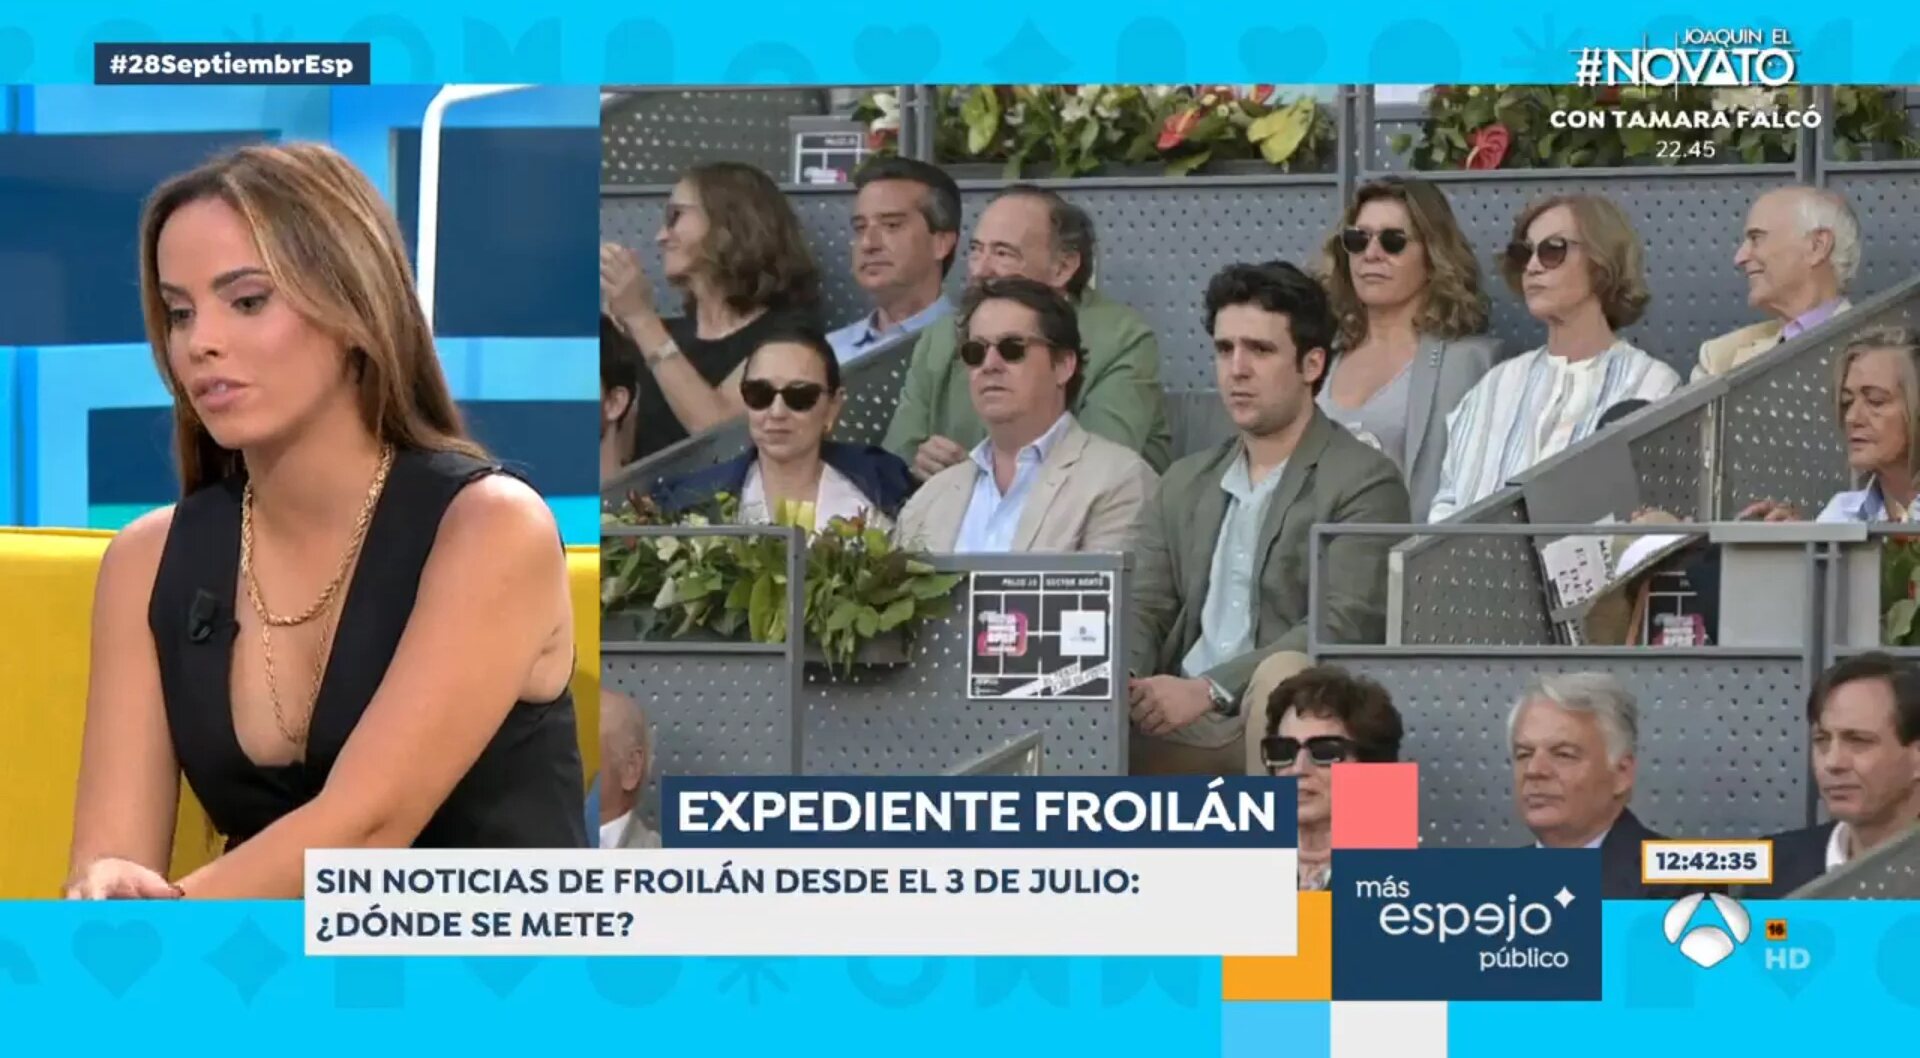 Gloria Camila ha sido colaboradora de 'Espejo público' tan solo 5 meses | Foto: Antena3.com